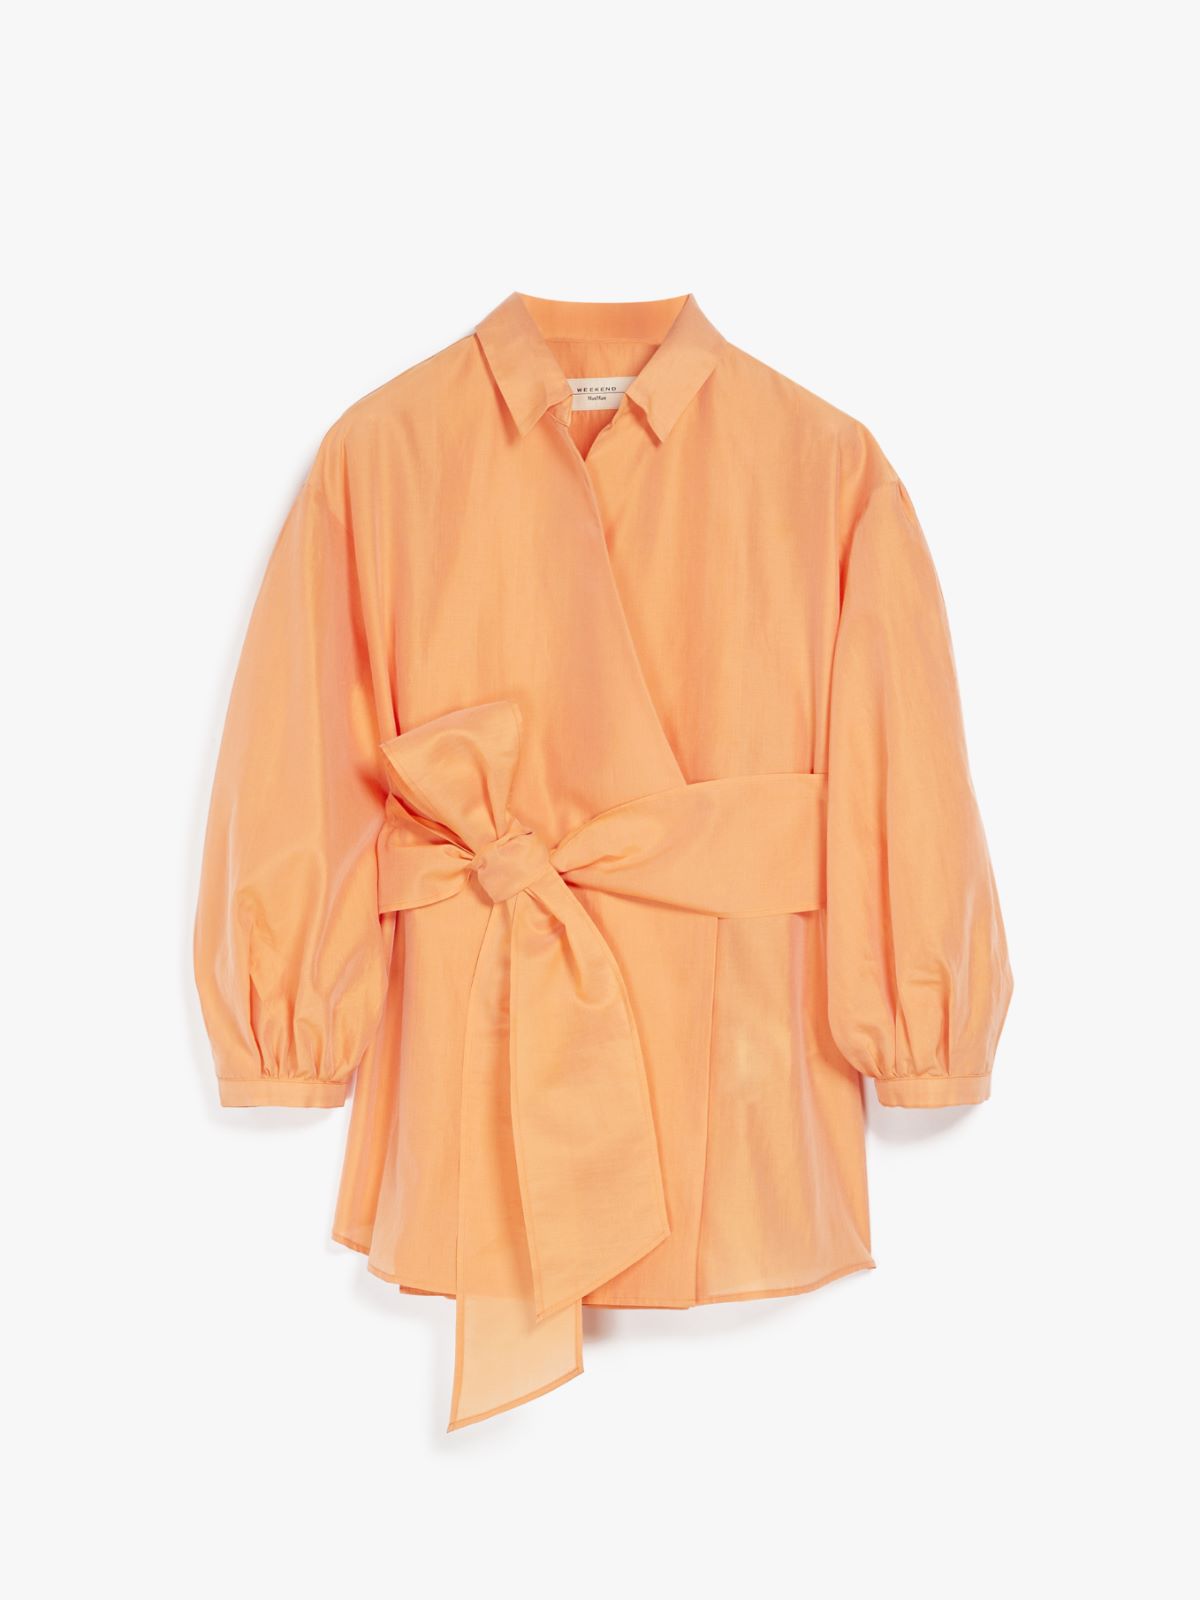 Cotton and silk canvas shirt, orange - Weekend Max Mara